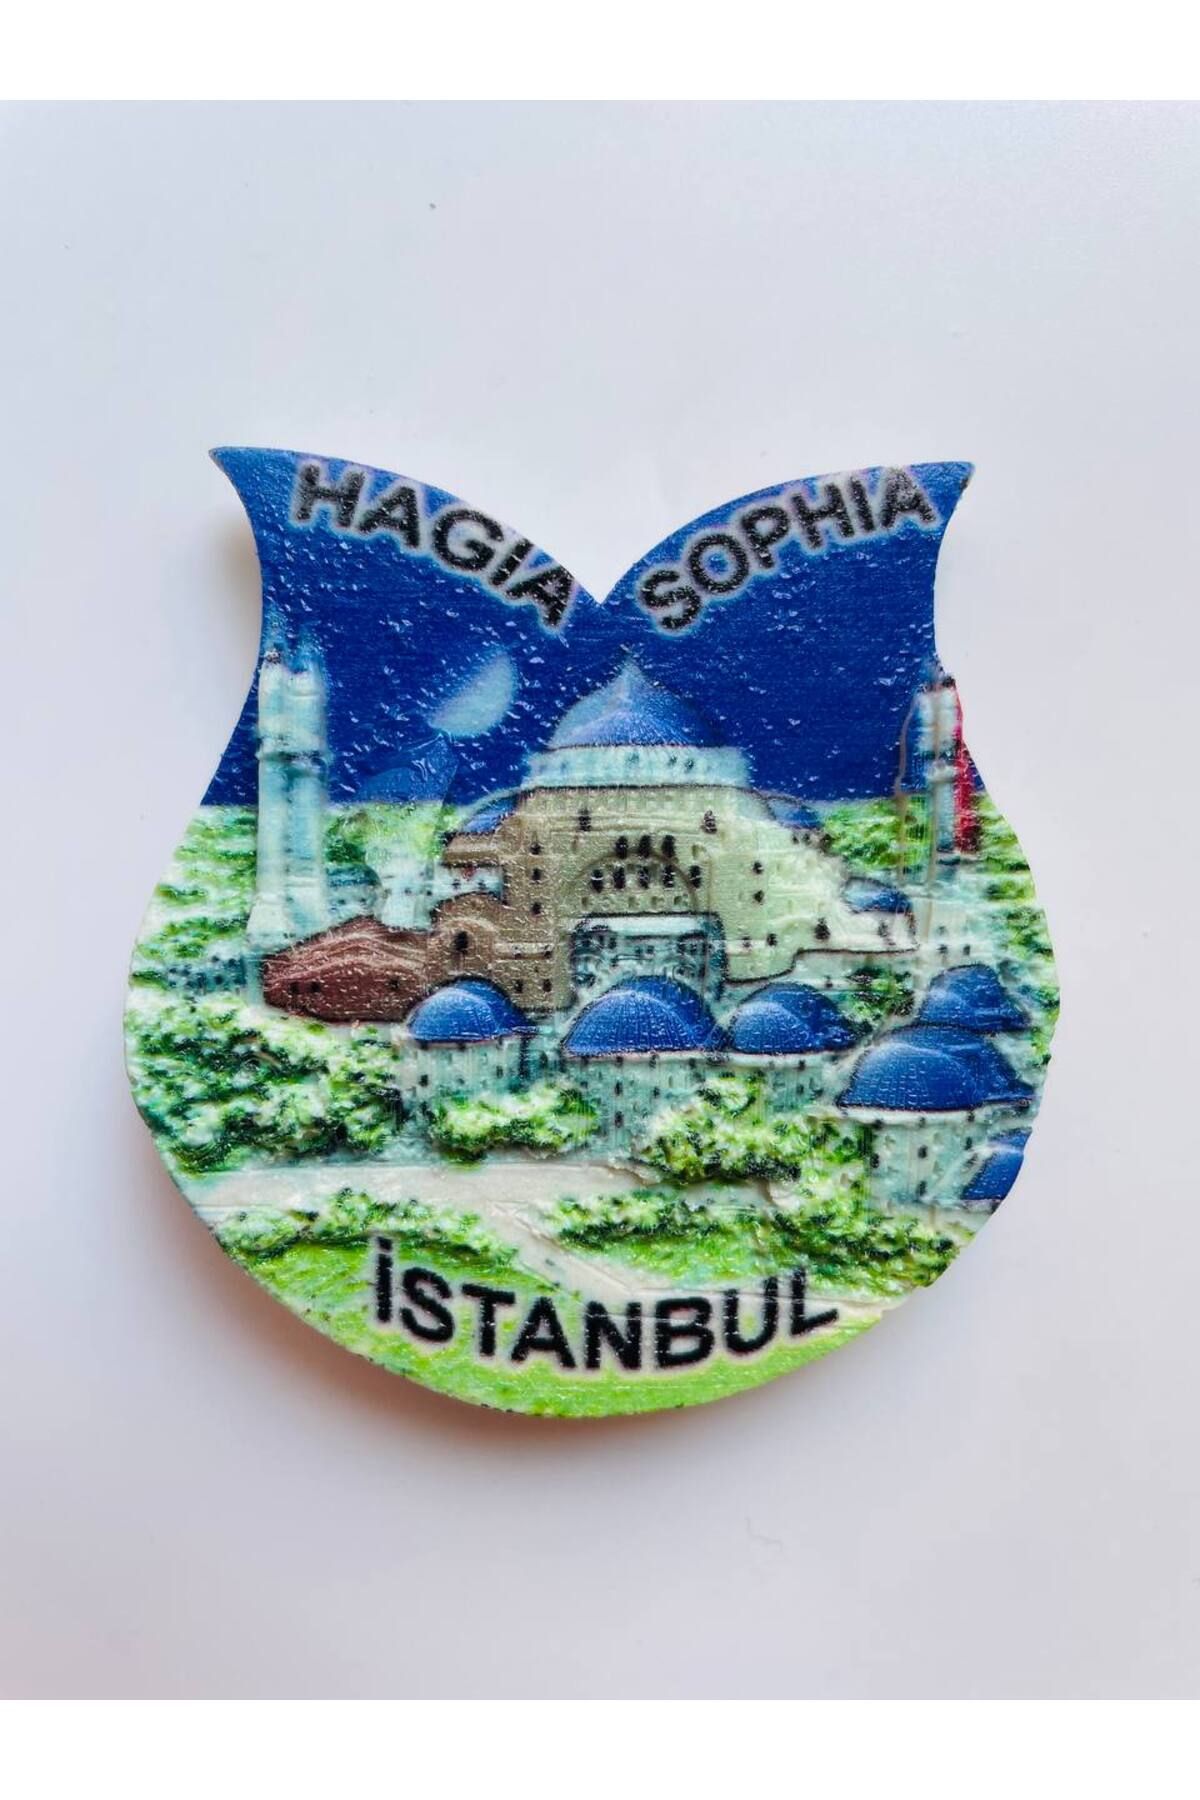 GALATA GIFT İstanbul Magnet, Buzdolabı Magneti, El Boyaması Magnet